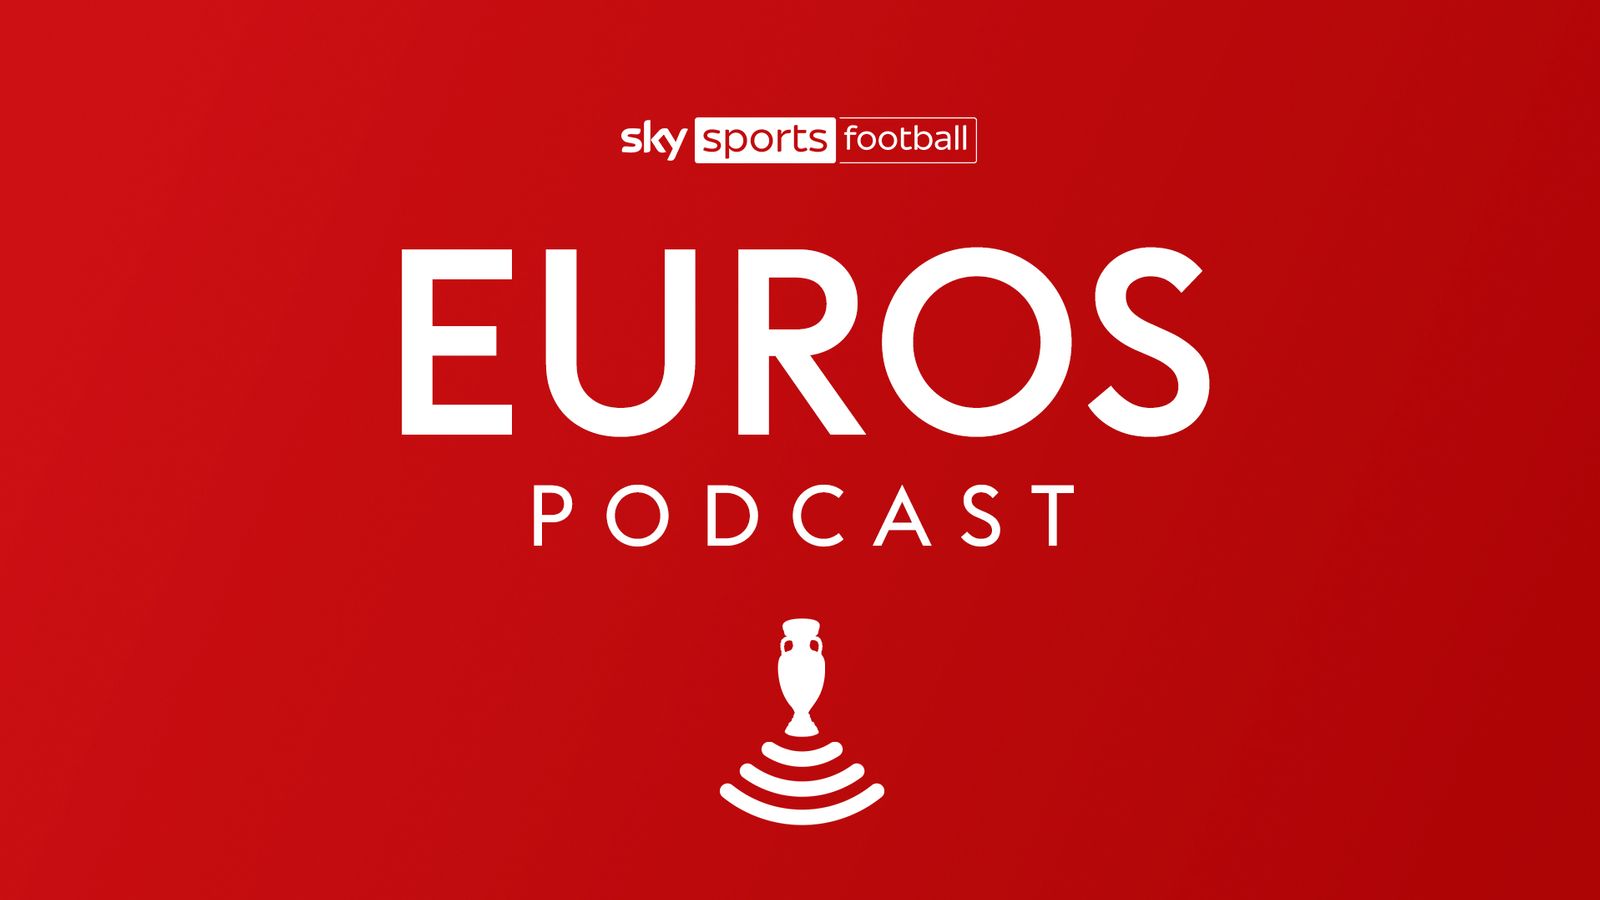 Suscribase al podcast Euros de Sky Sports Football Noticias